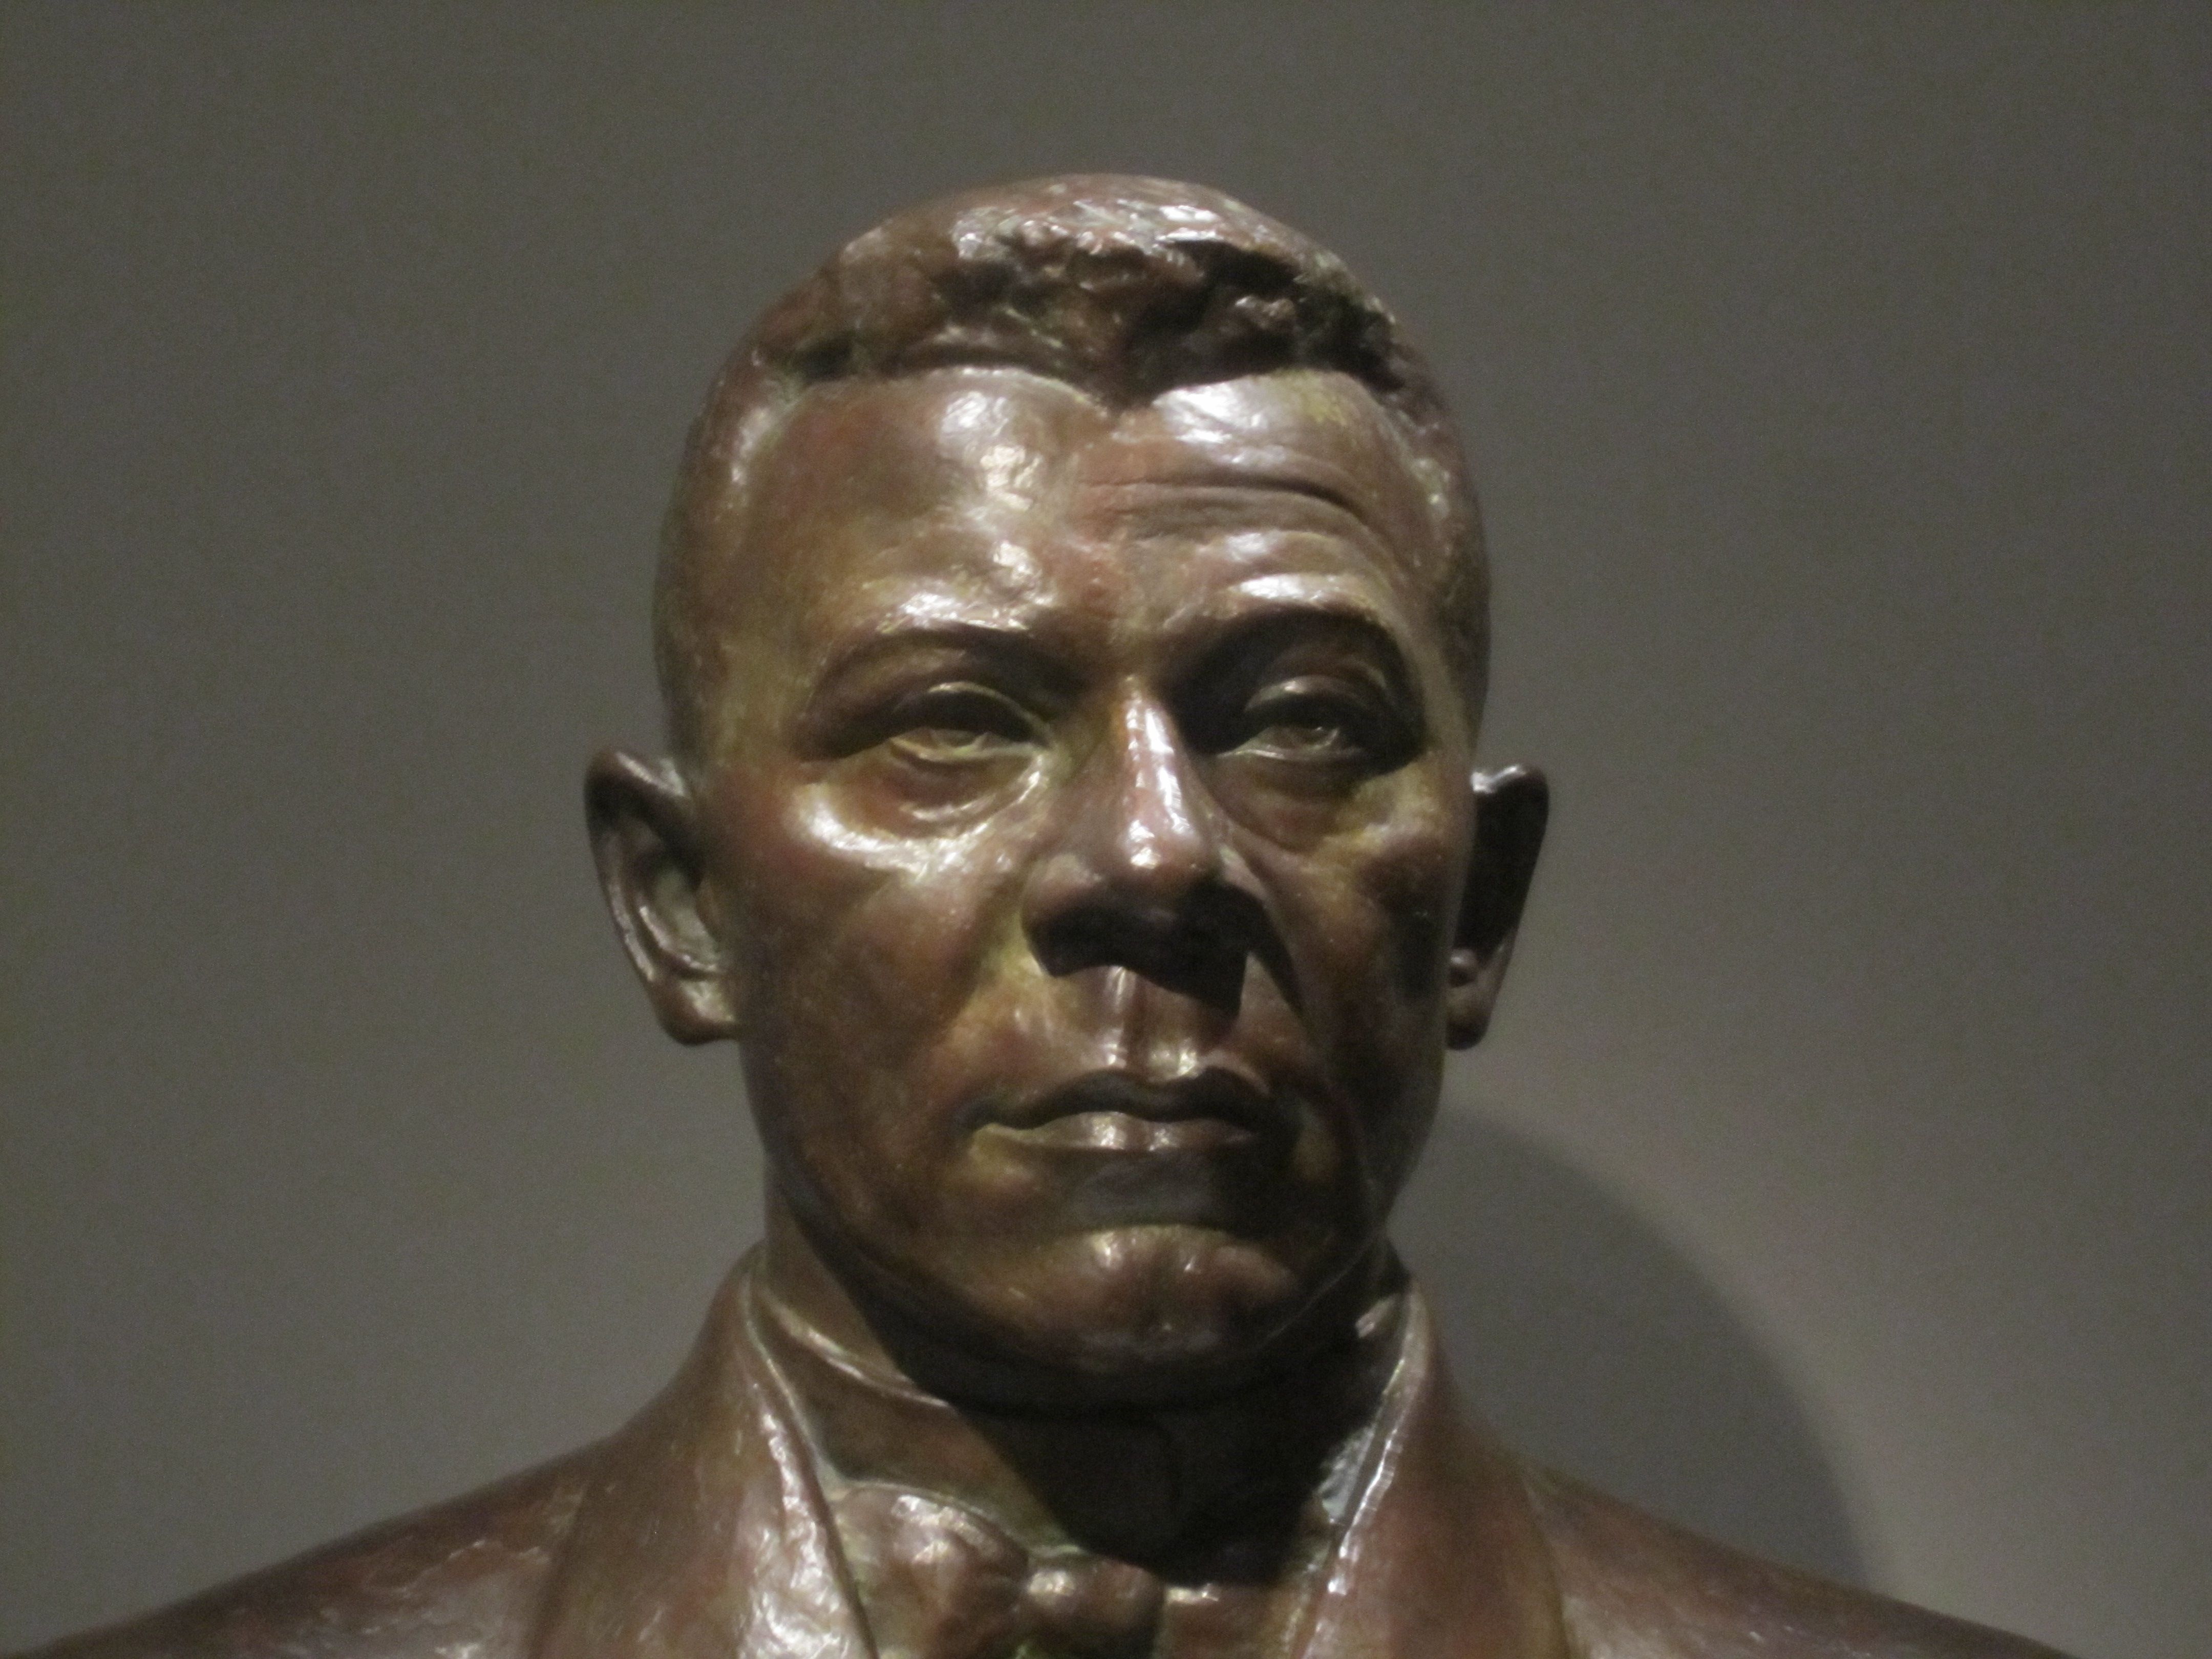 Booker T. Washington sculpture at National Portrait Gallery